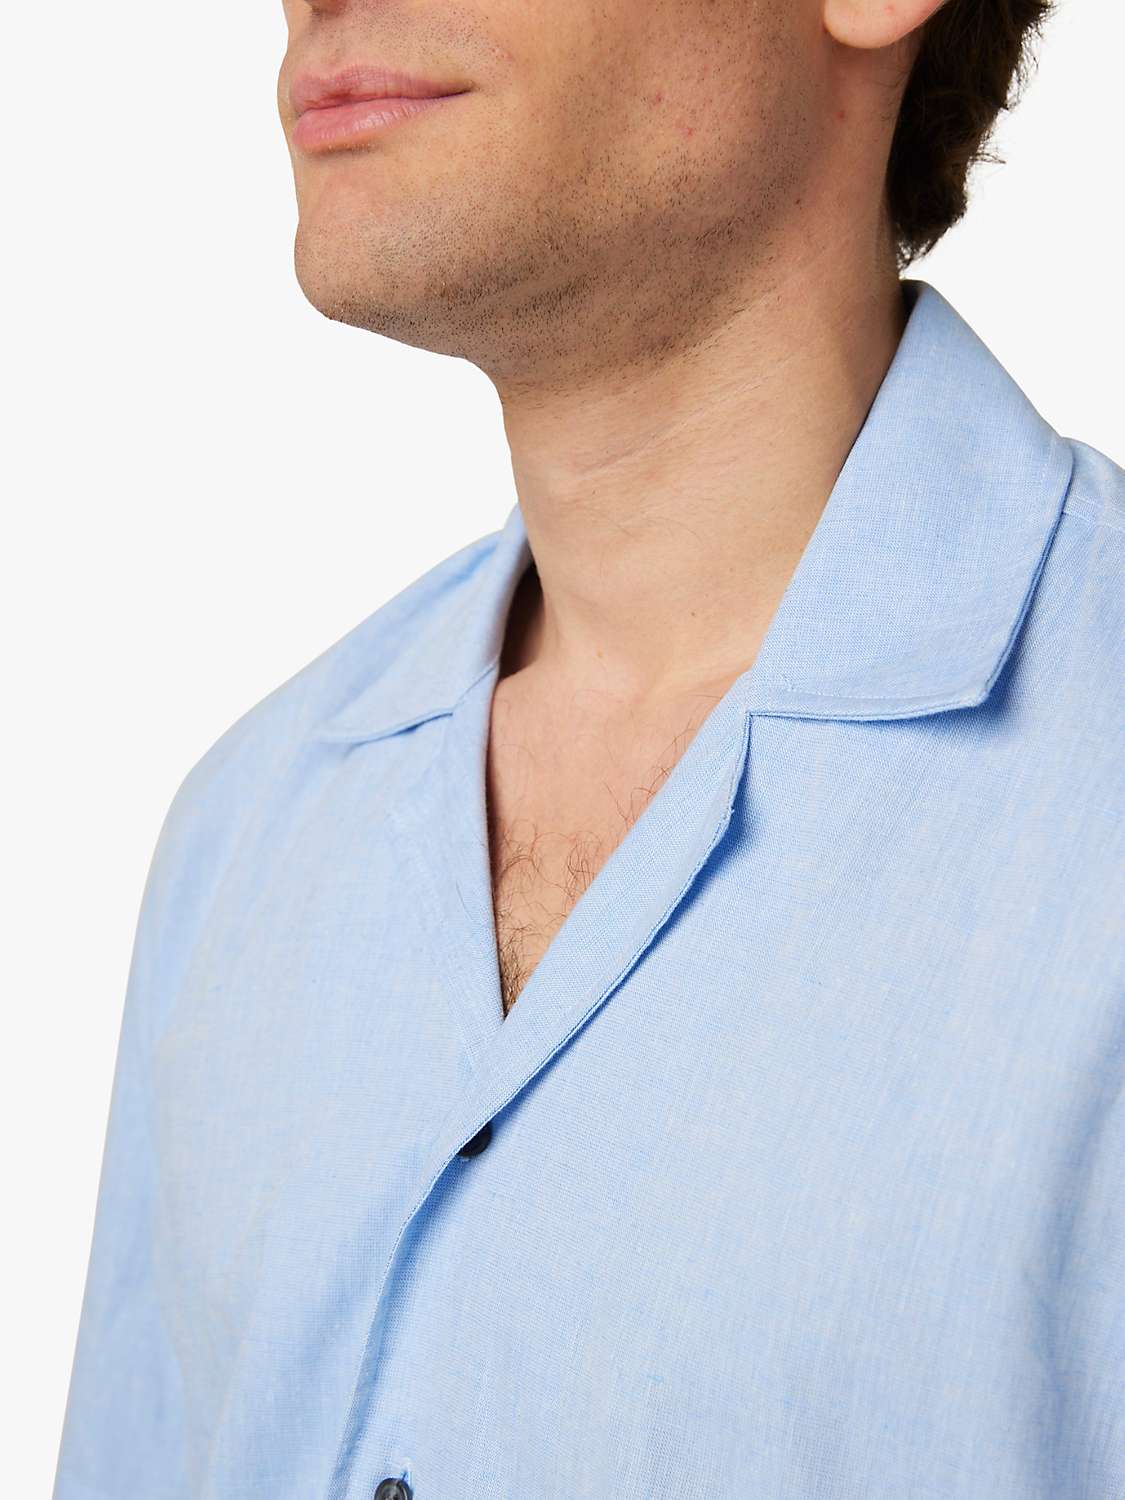 Buy Peregrine Plain Creek Short Sleeve Shirt, Blue Online at johnlewis.com